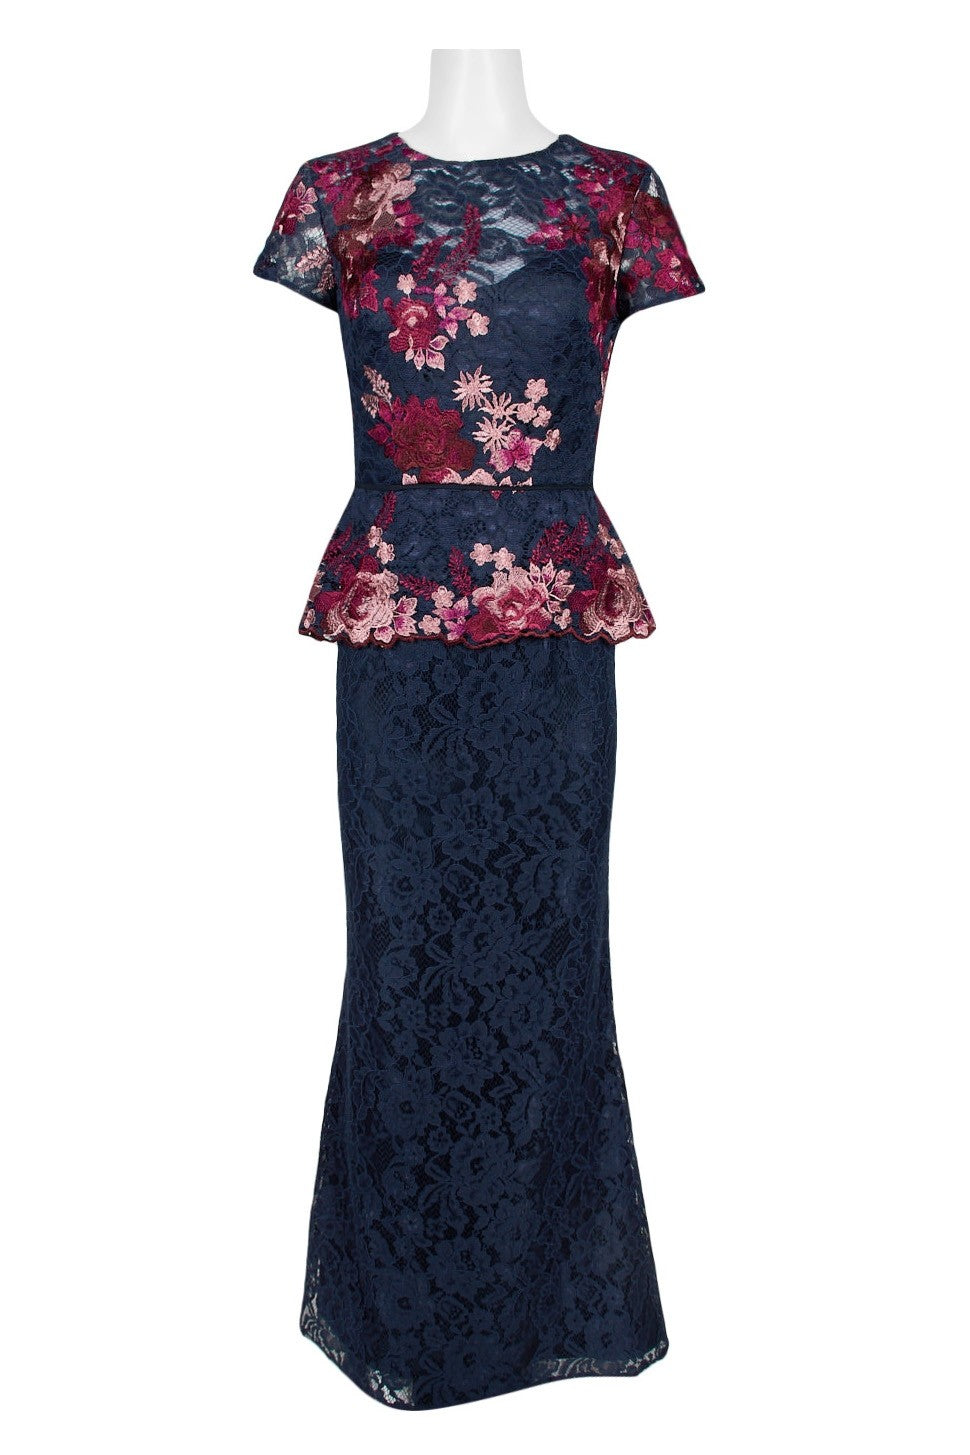 JS Collections Lace Peplum Dress - Navy Fuchsia